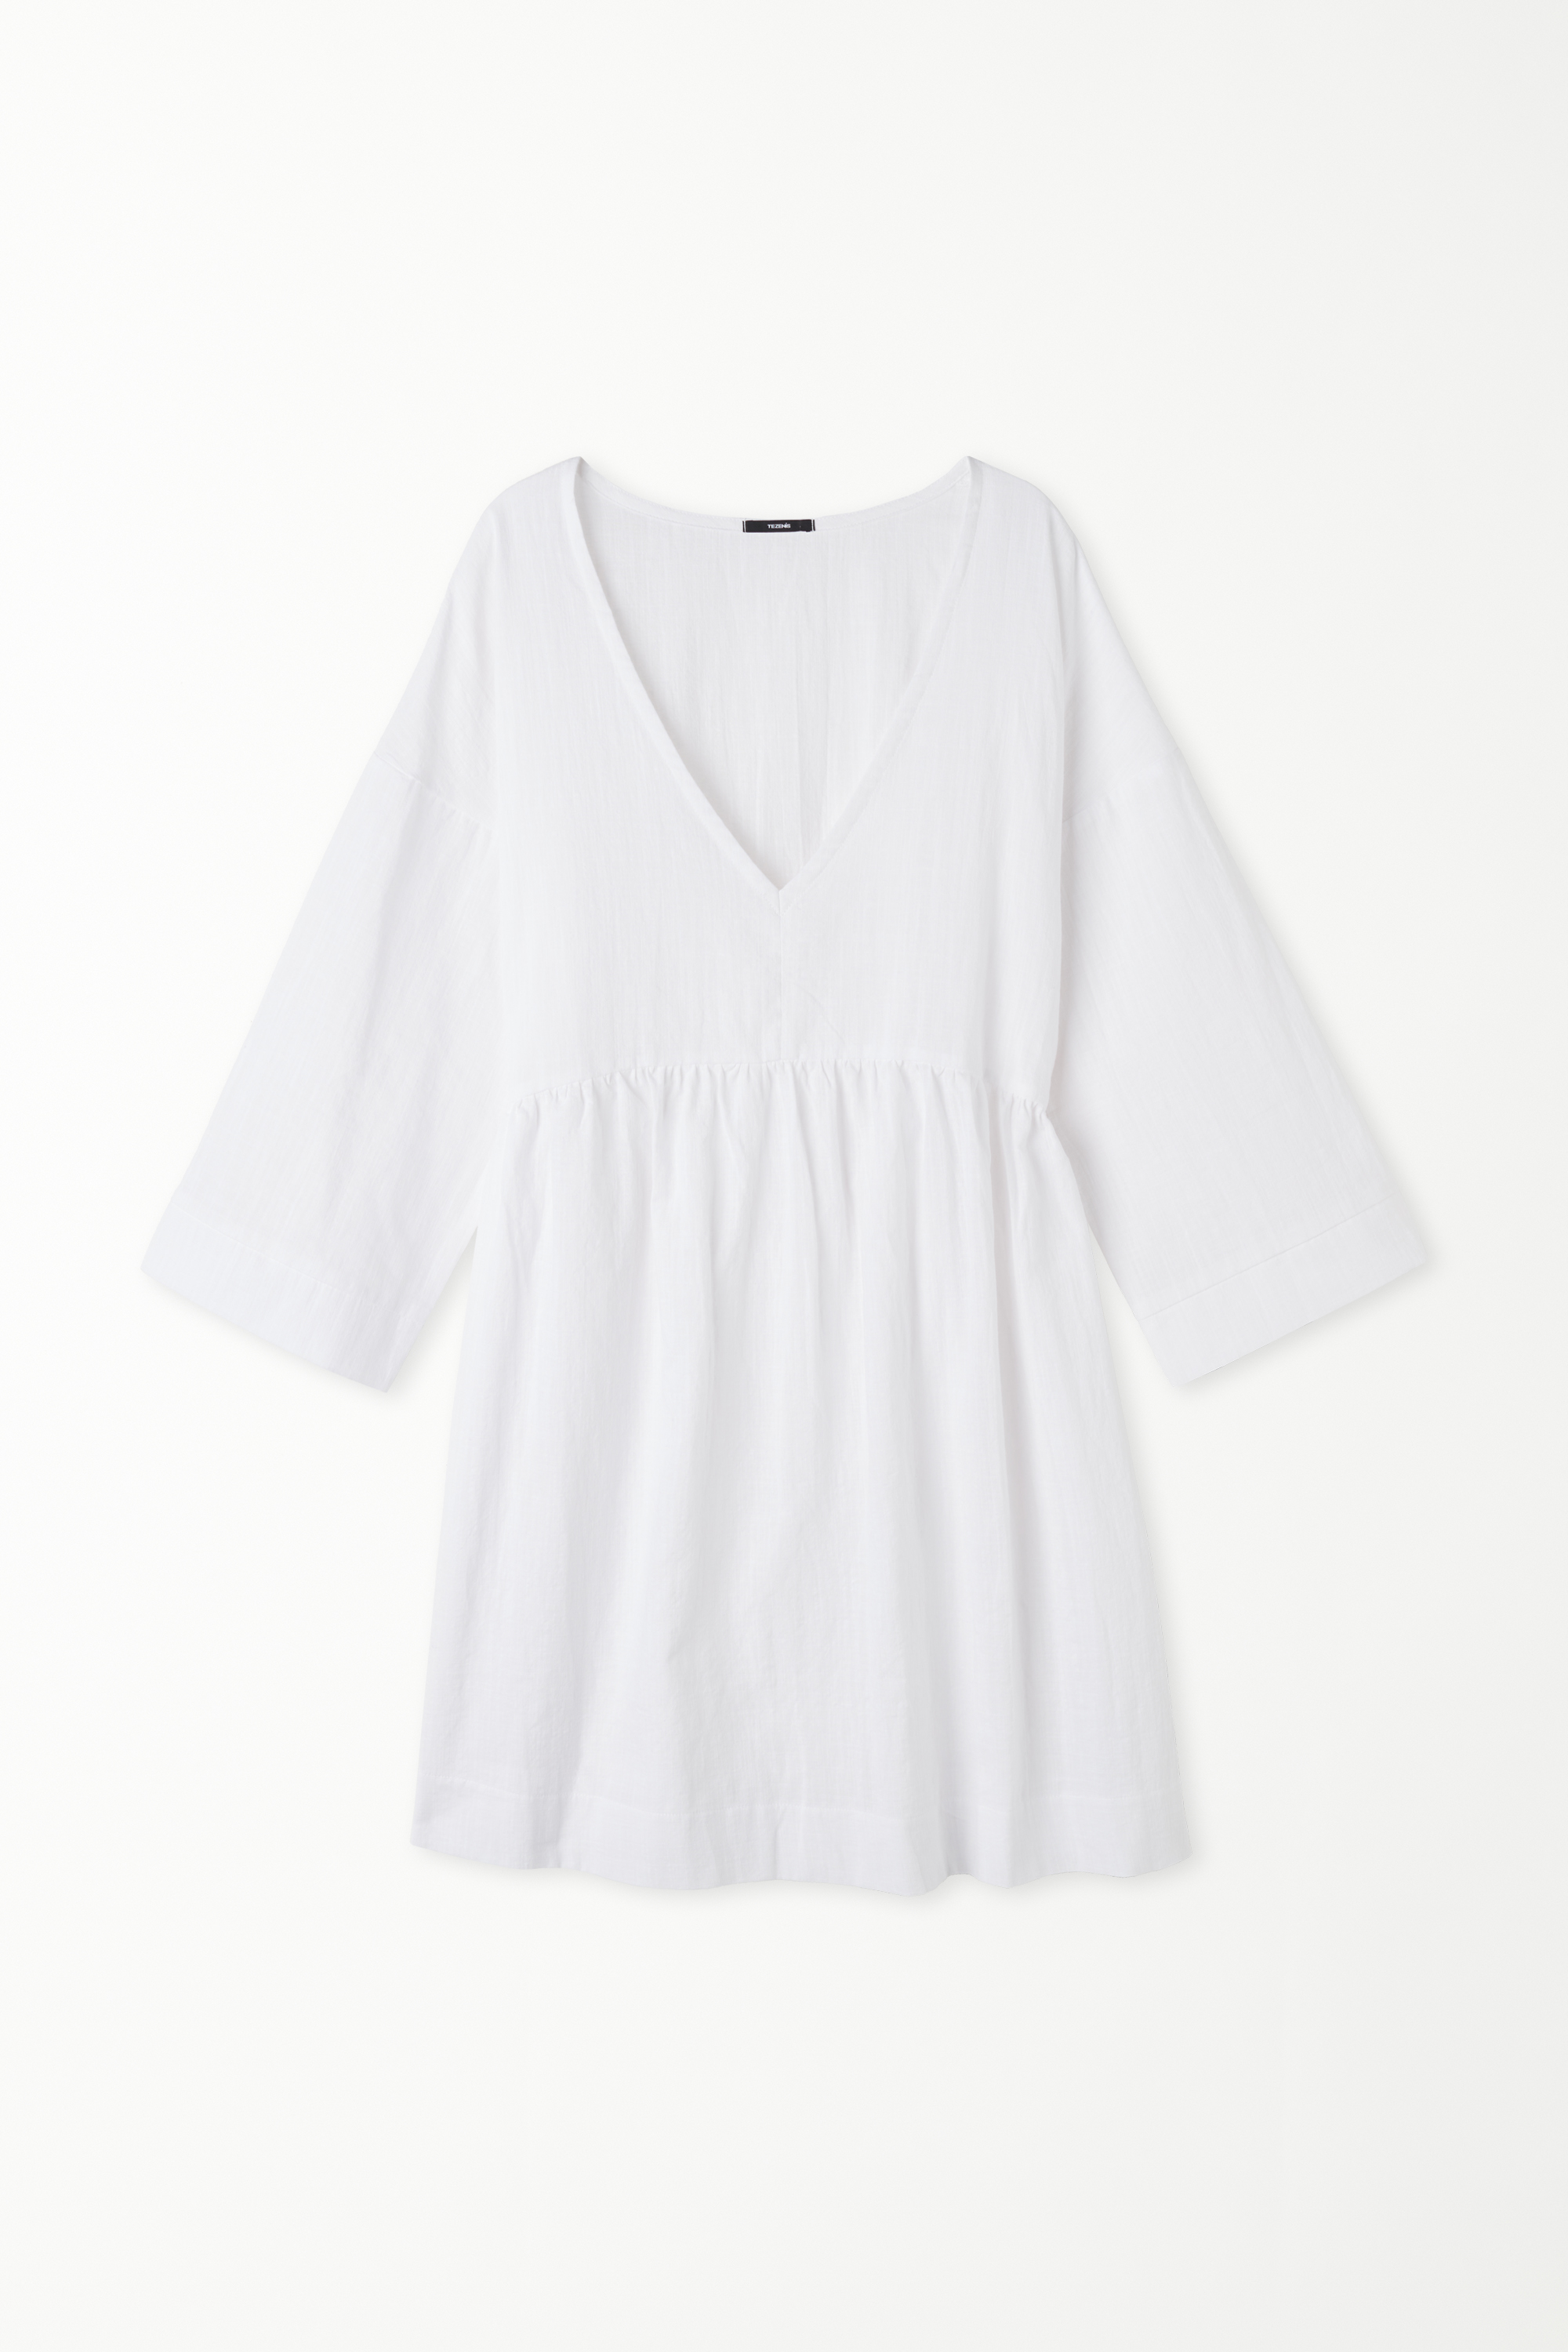 Loose Fit 3/4 Sleeve Mini Dress in 100% Super Light Cotton